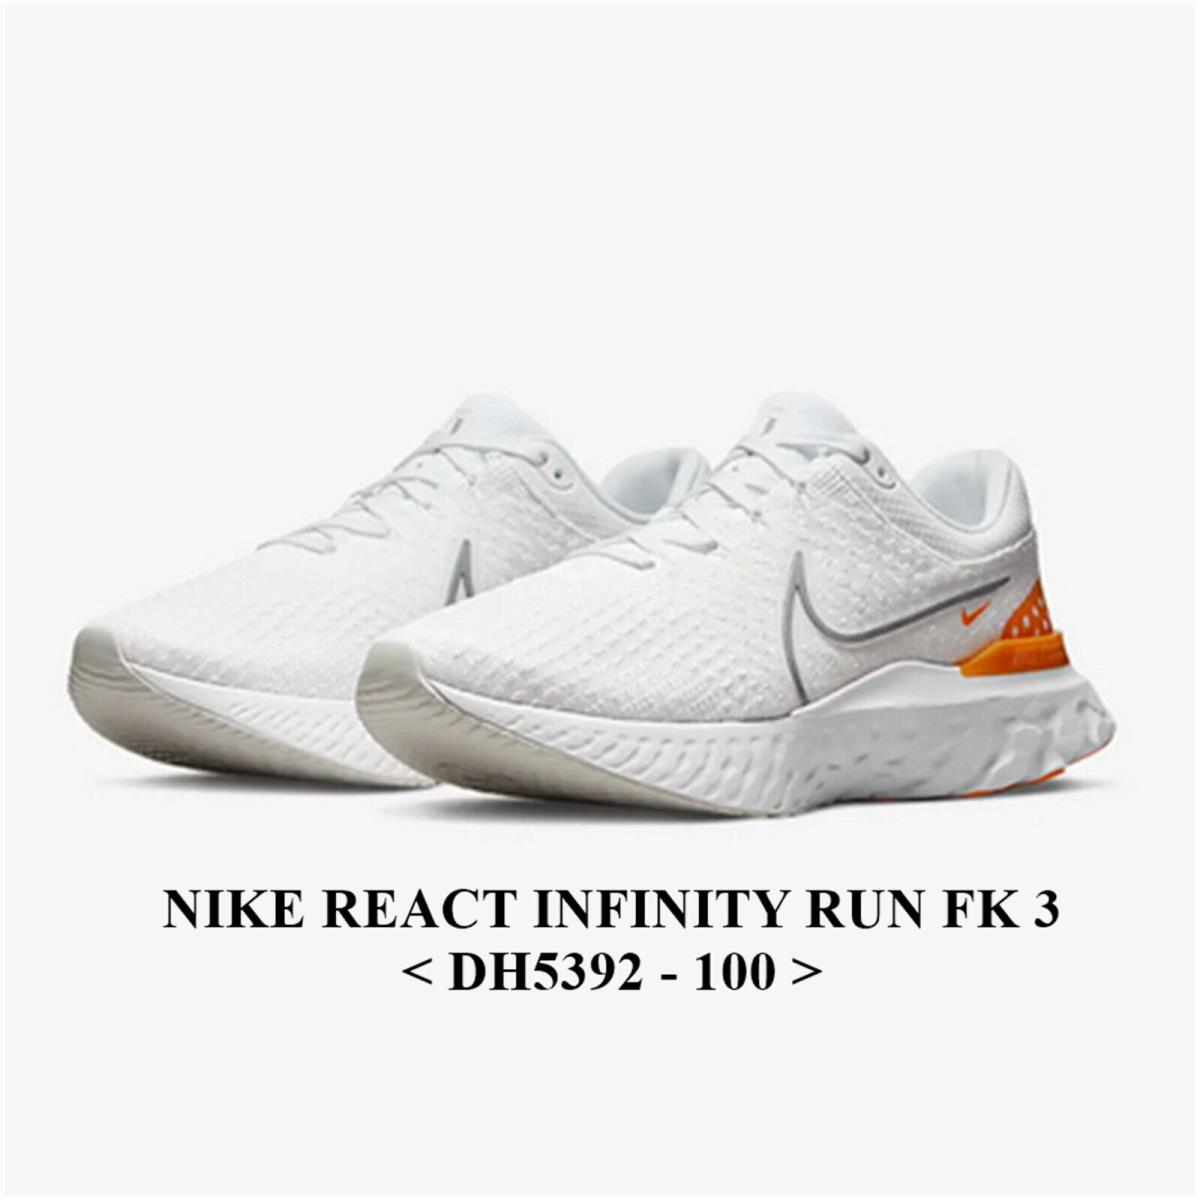 Nike React Infinity Run FK 3 DH5392-100 Men Running Shoes - WHITE/PARTICLE GREY-KUMQUAT